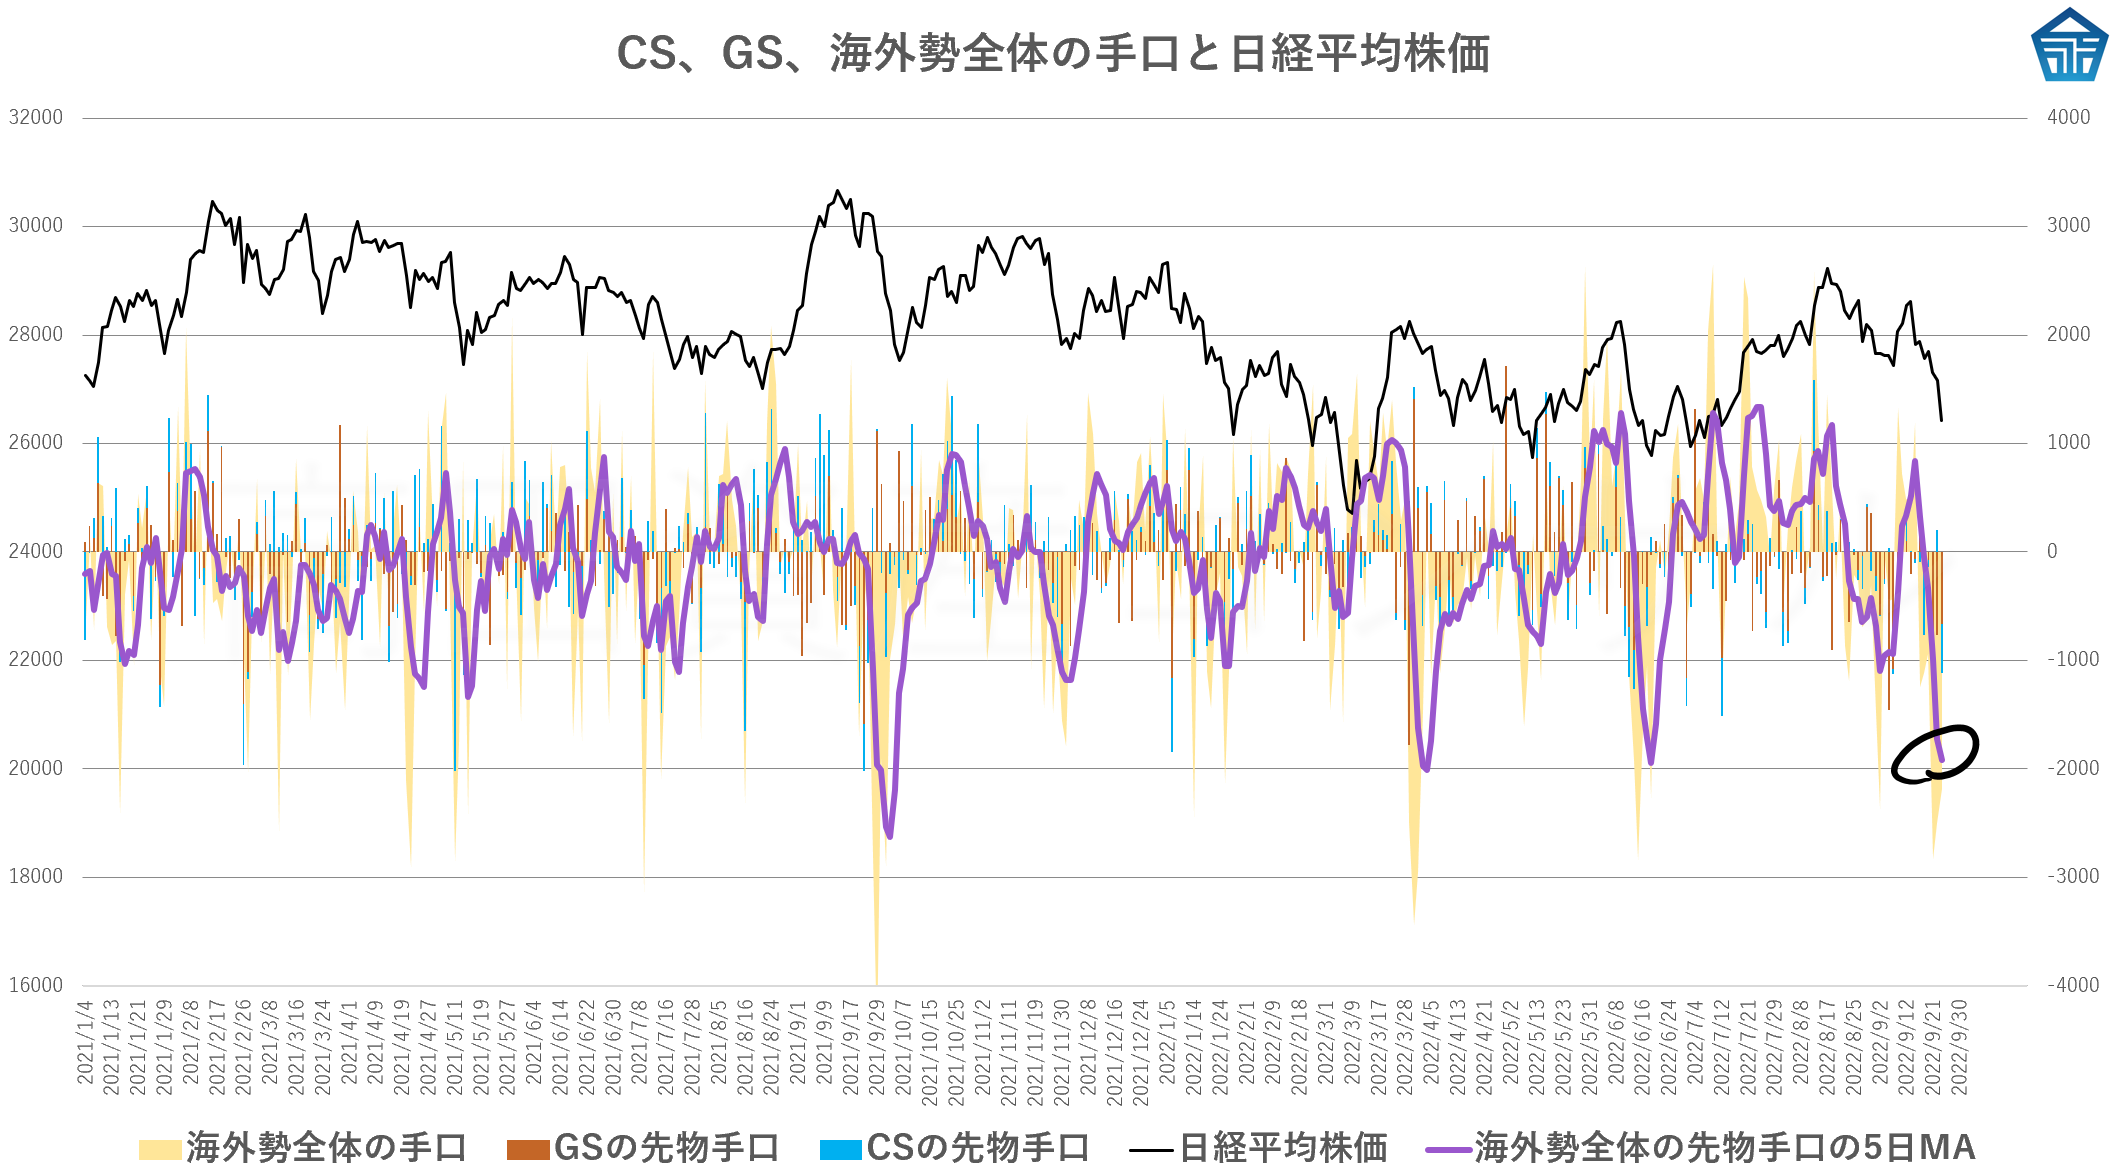 CS、GS、海外勢全体の手口と日経平均株価202209263t3t3t3t3y